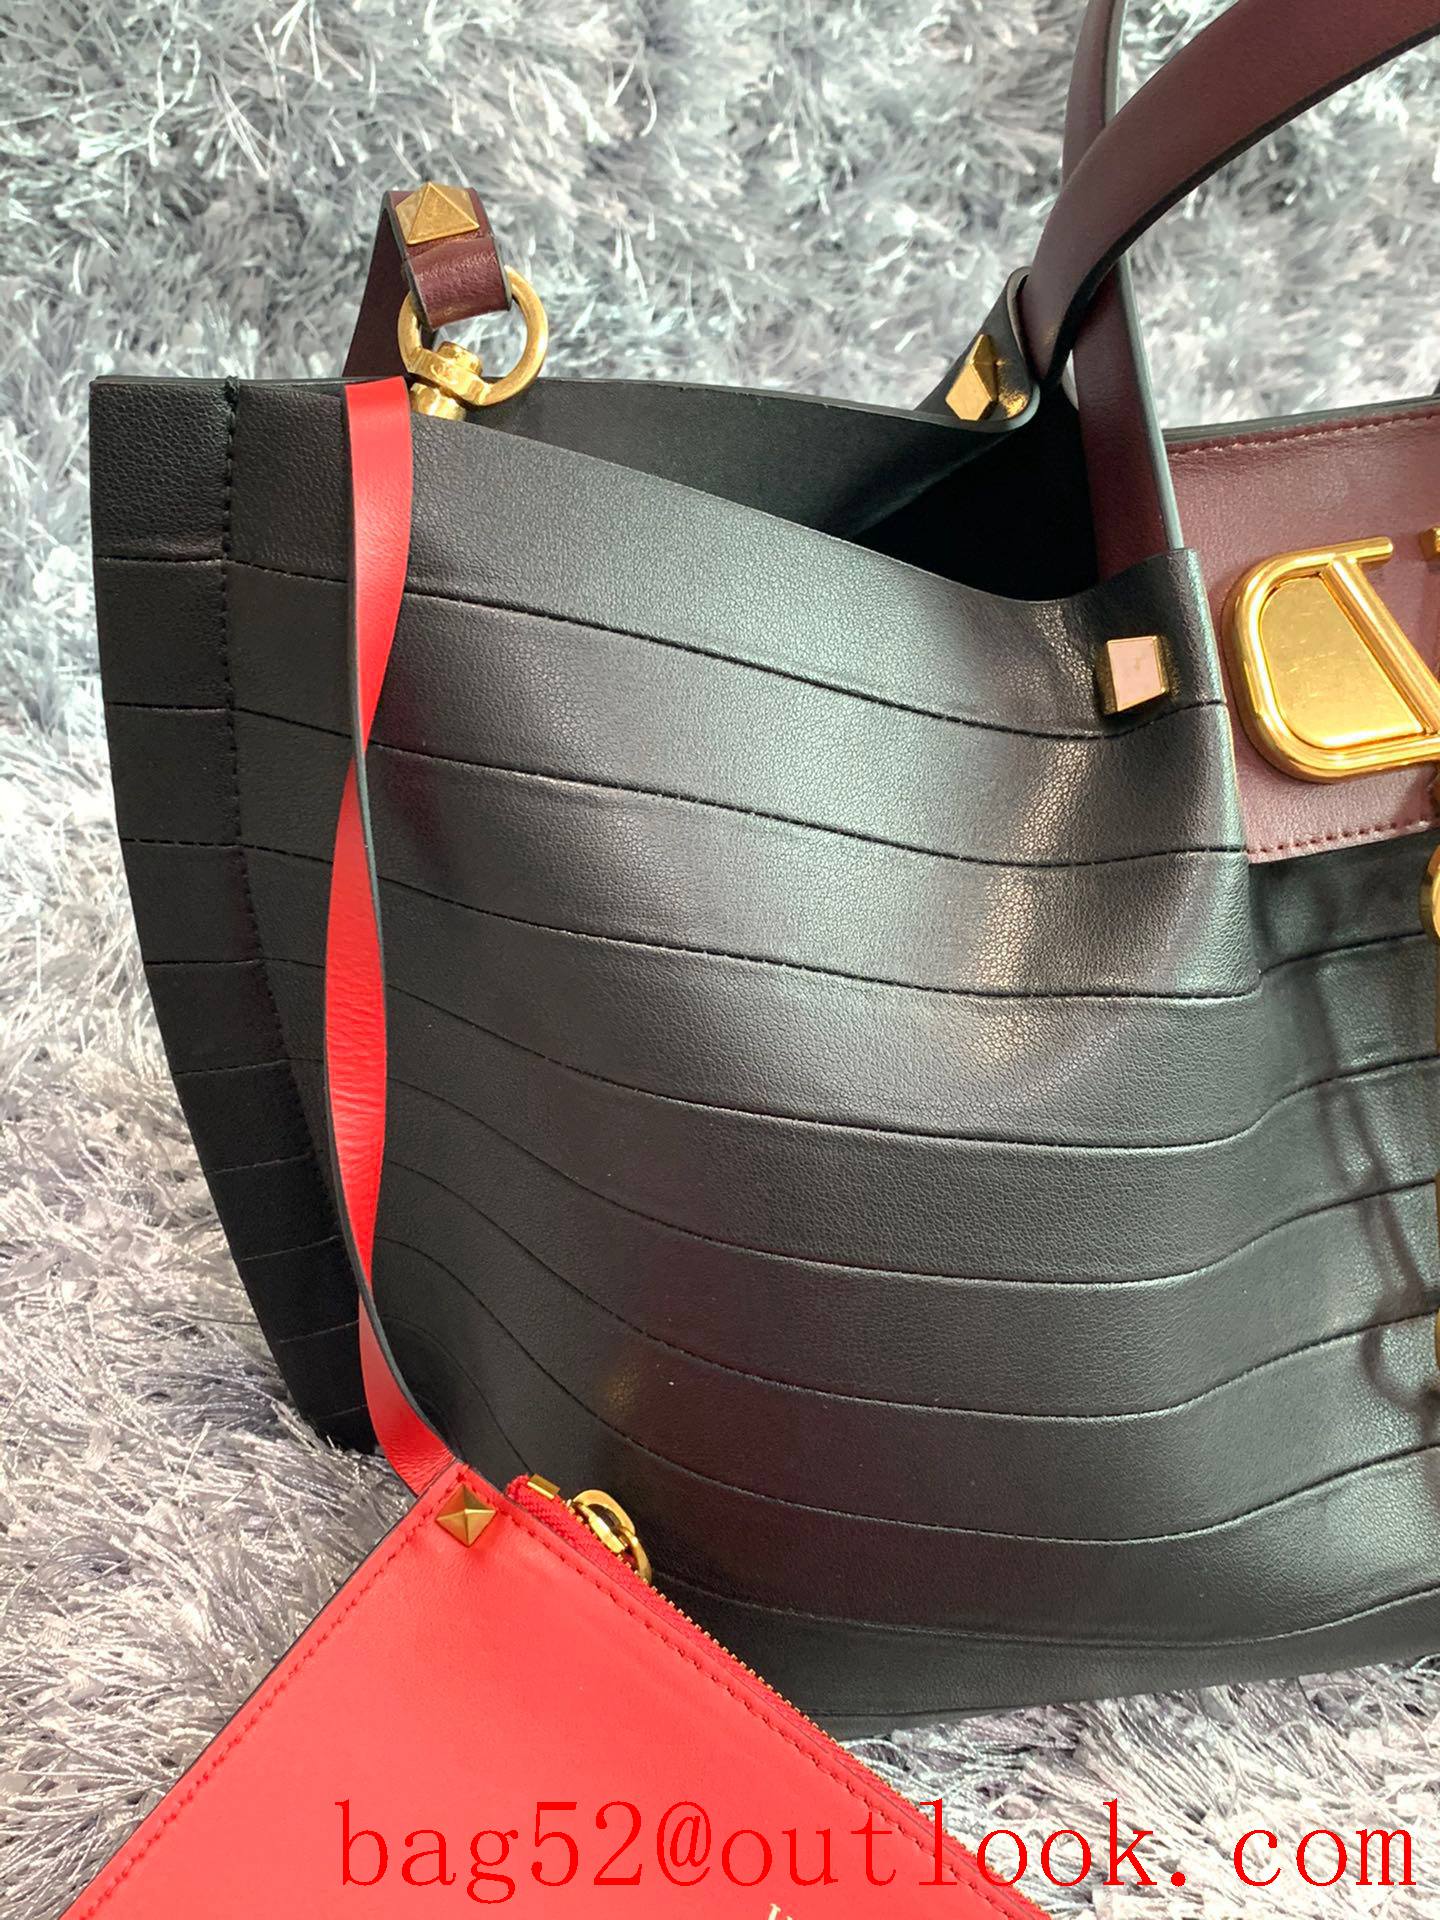 Valentino Garavani Escape VLOGO Shopping Bag Black Tote Handbag